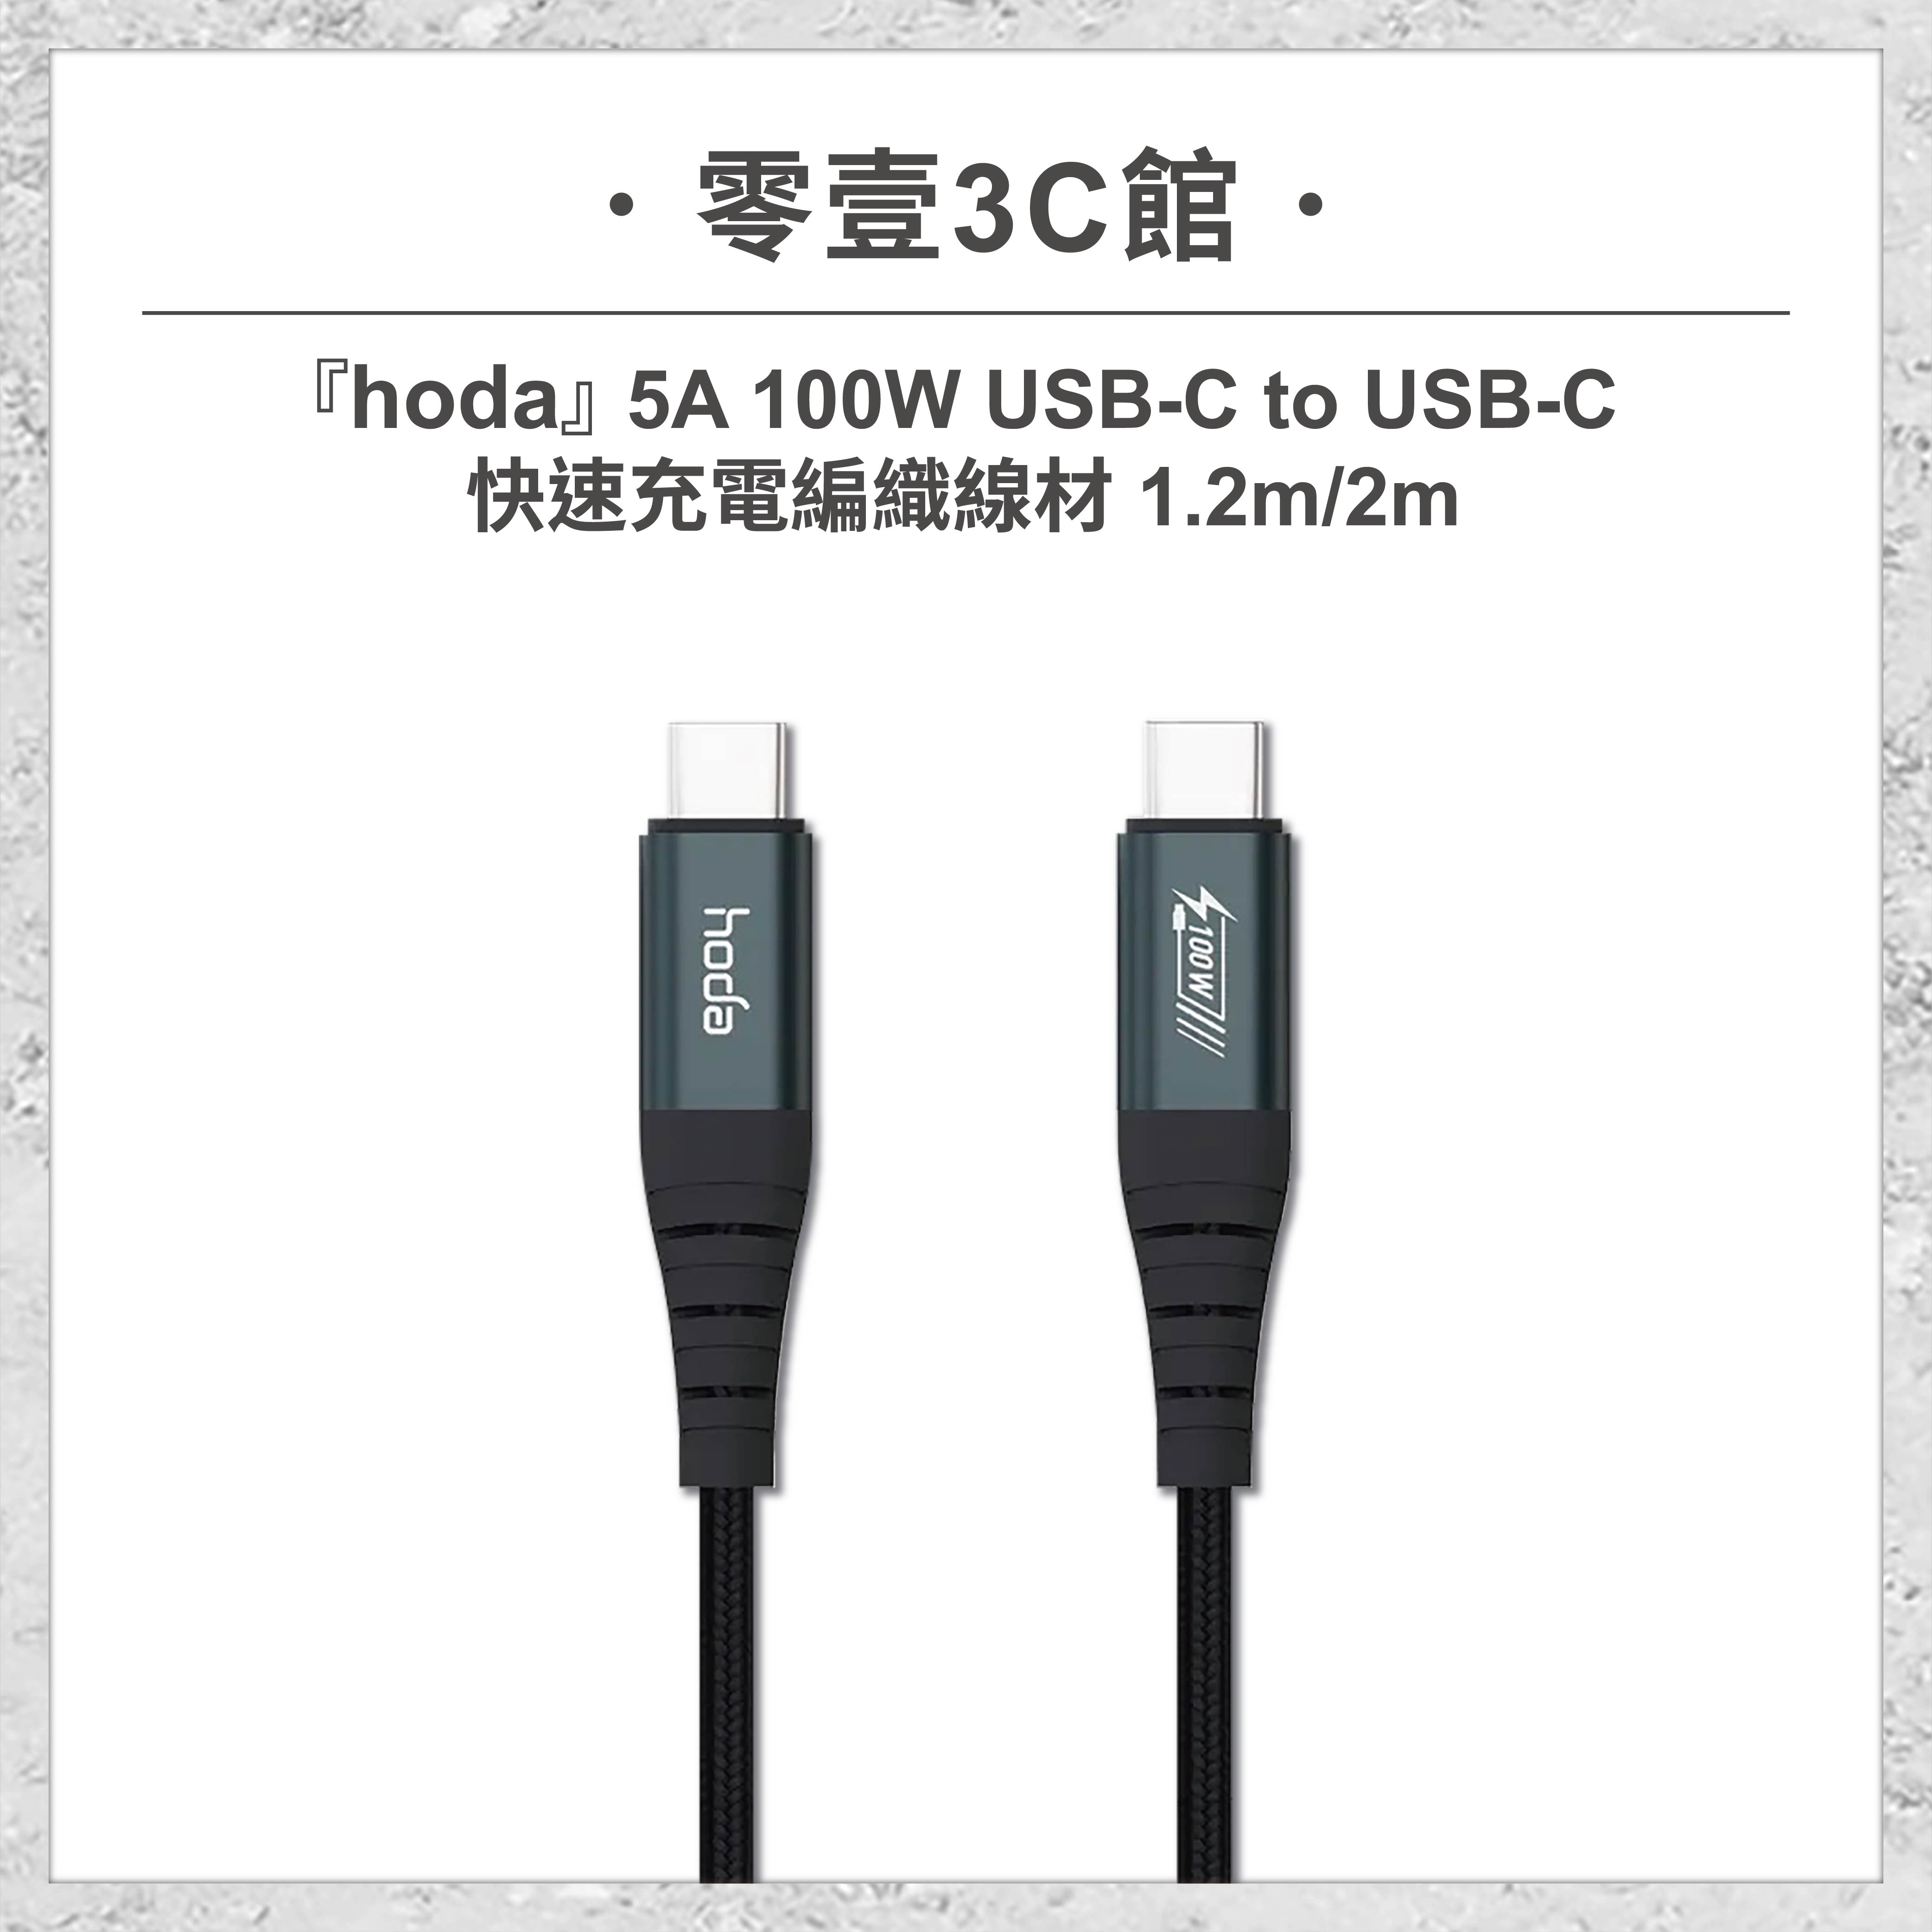 『hoda』5A 100W USB-C to USB-C快速充電編織線材 1.2m/2m快速傳輸線 雙頭Type-C充電線